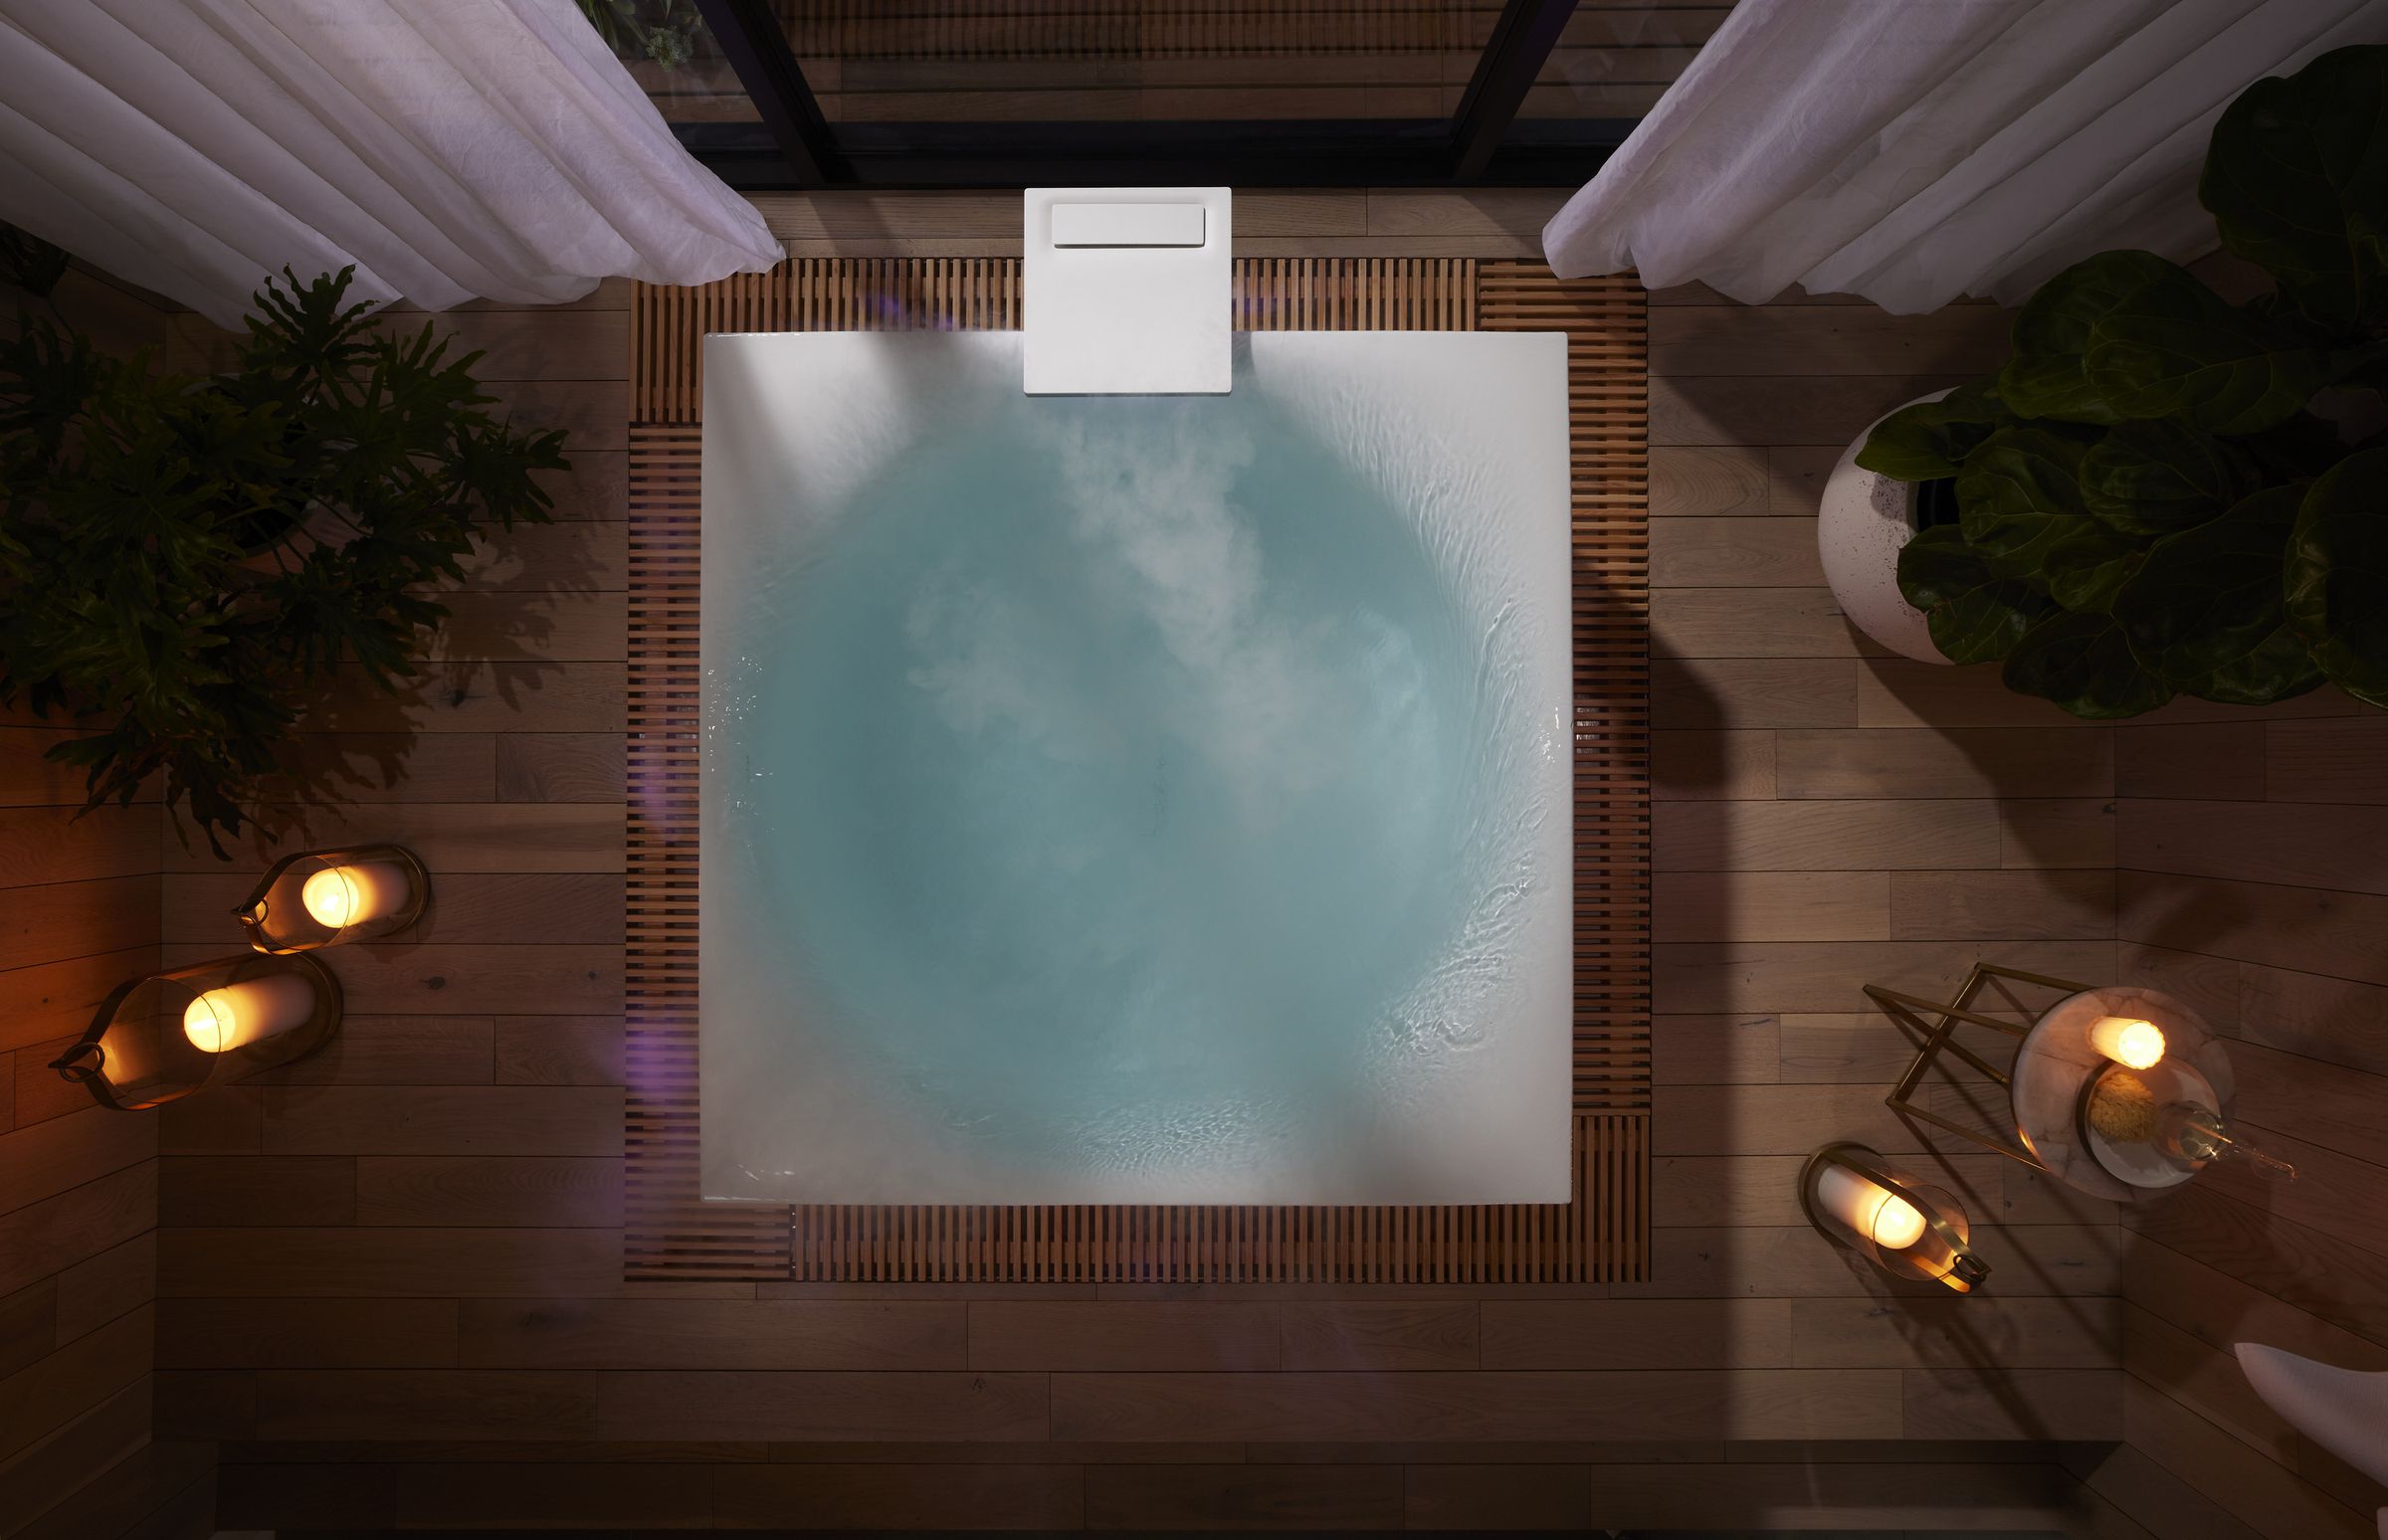 The Stillness Bath is an immersive smart bathtub that starts at $8,000.